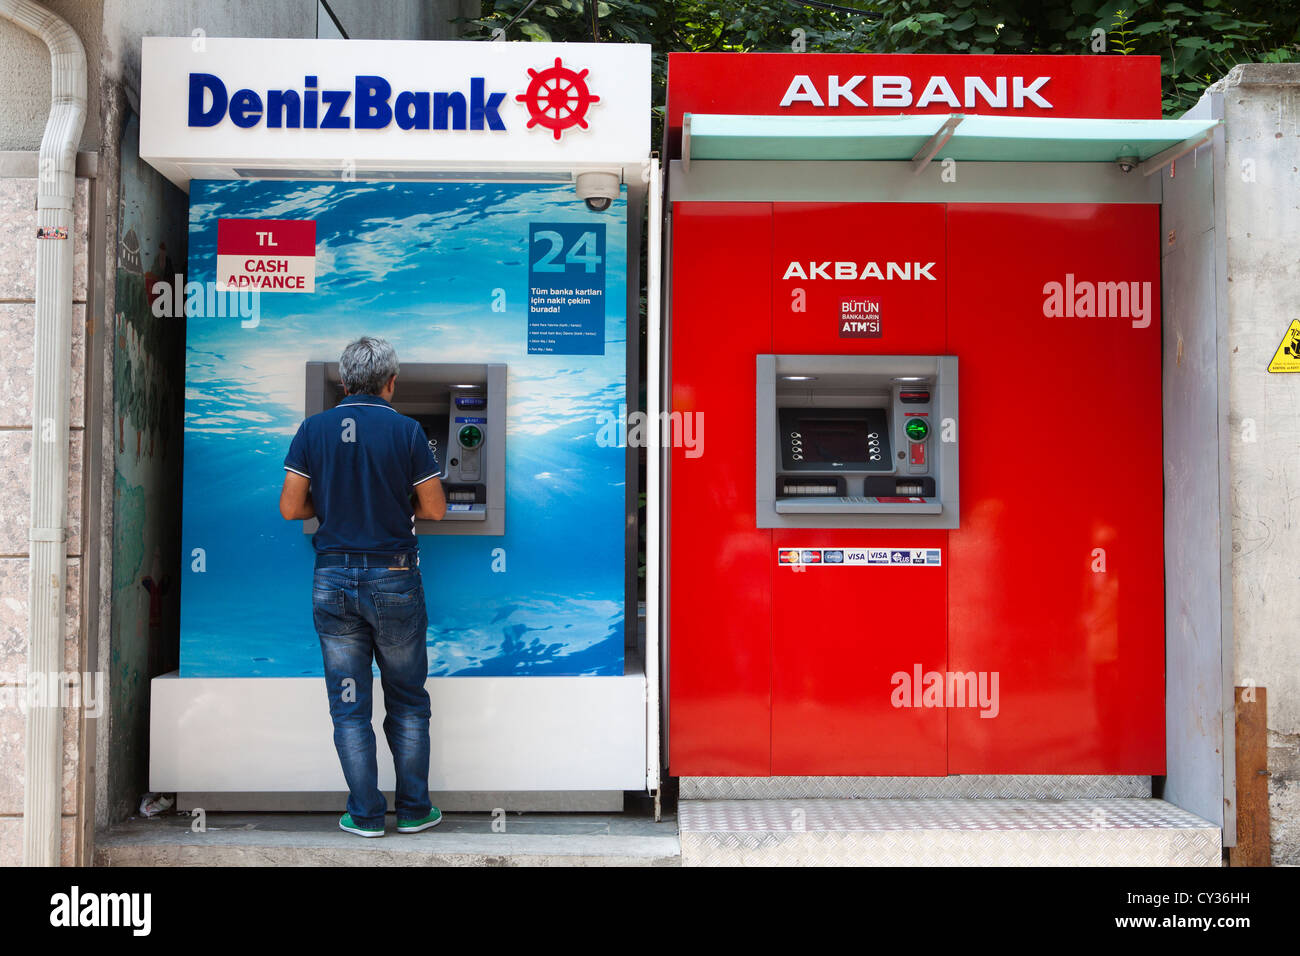 ATM, istanbul Stock Photo